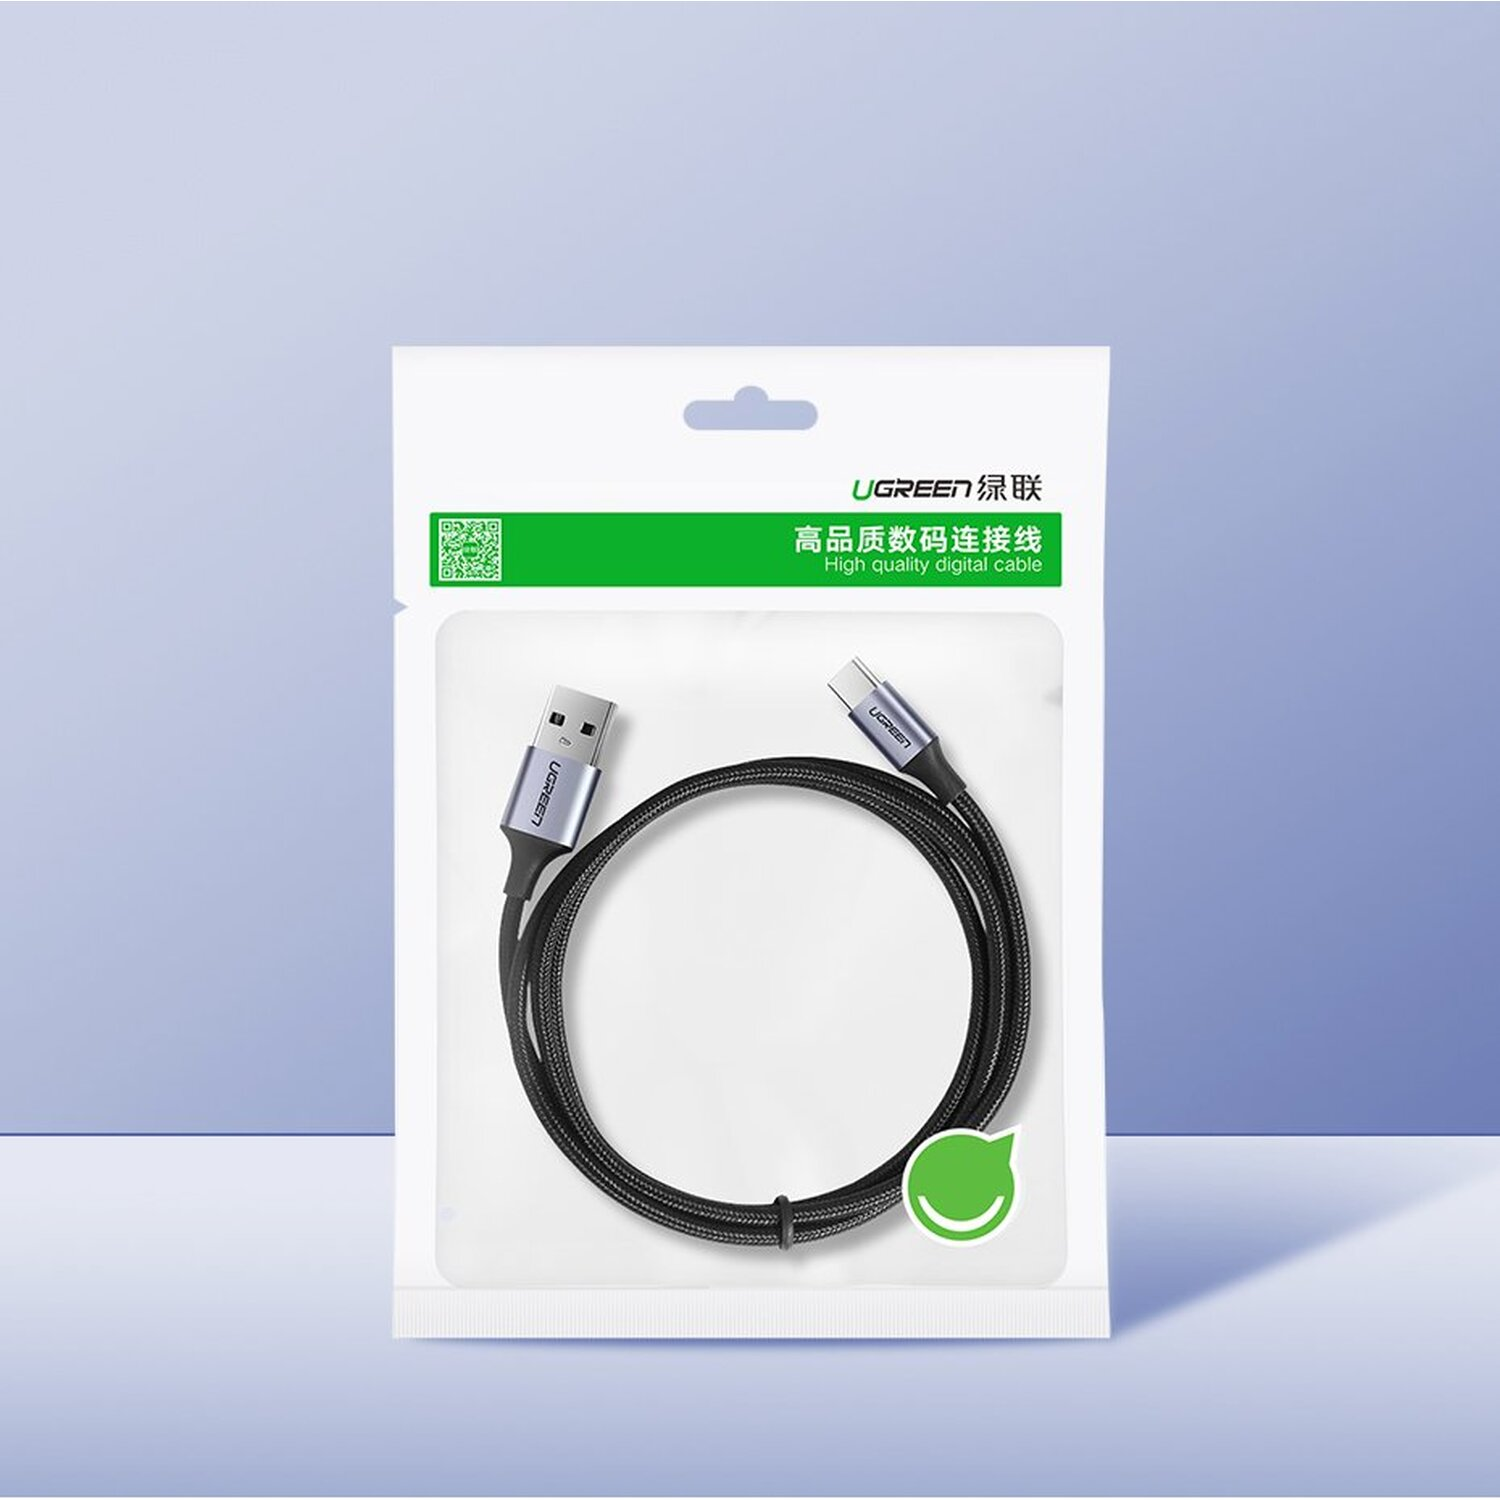 UGREEN Kabel USB Charge C - Grau Ladekabel, 3.0, 2,0 Typ Quick USB m